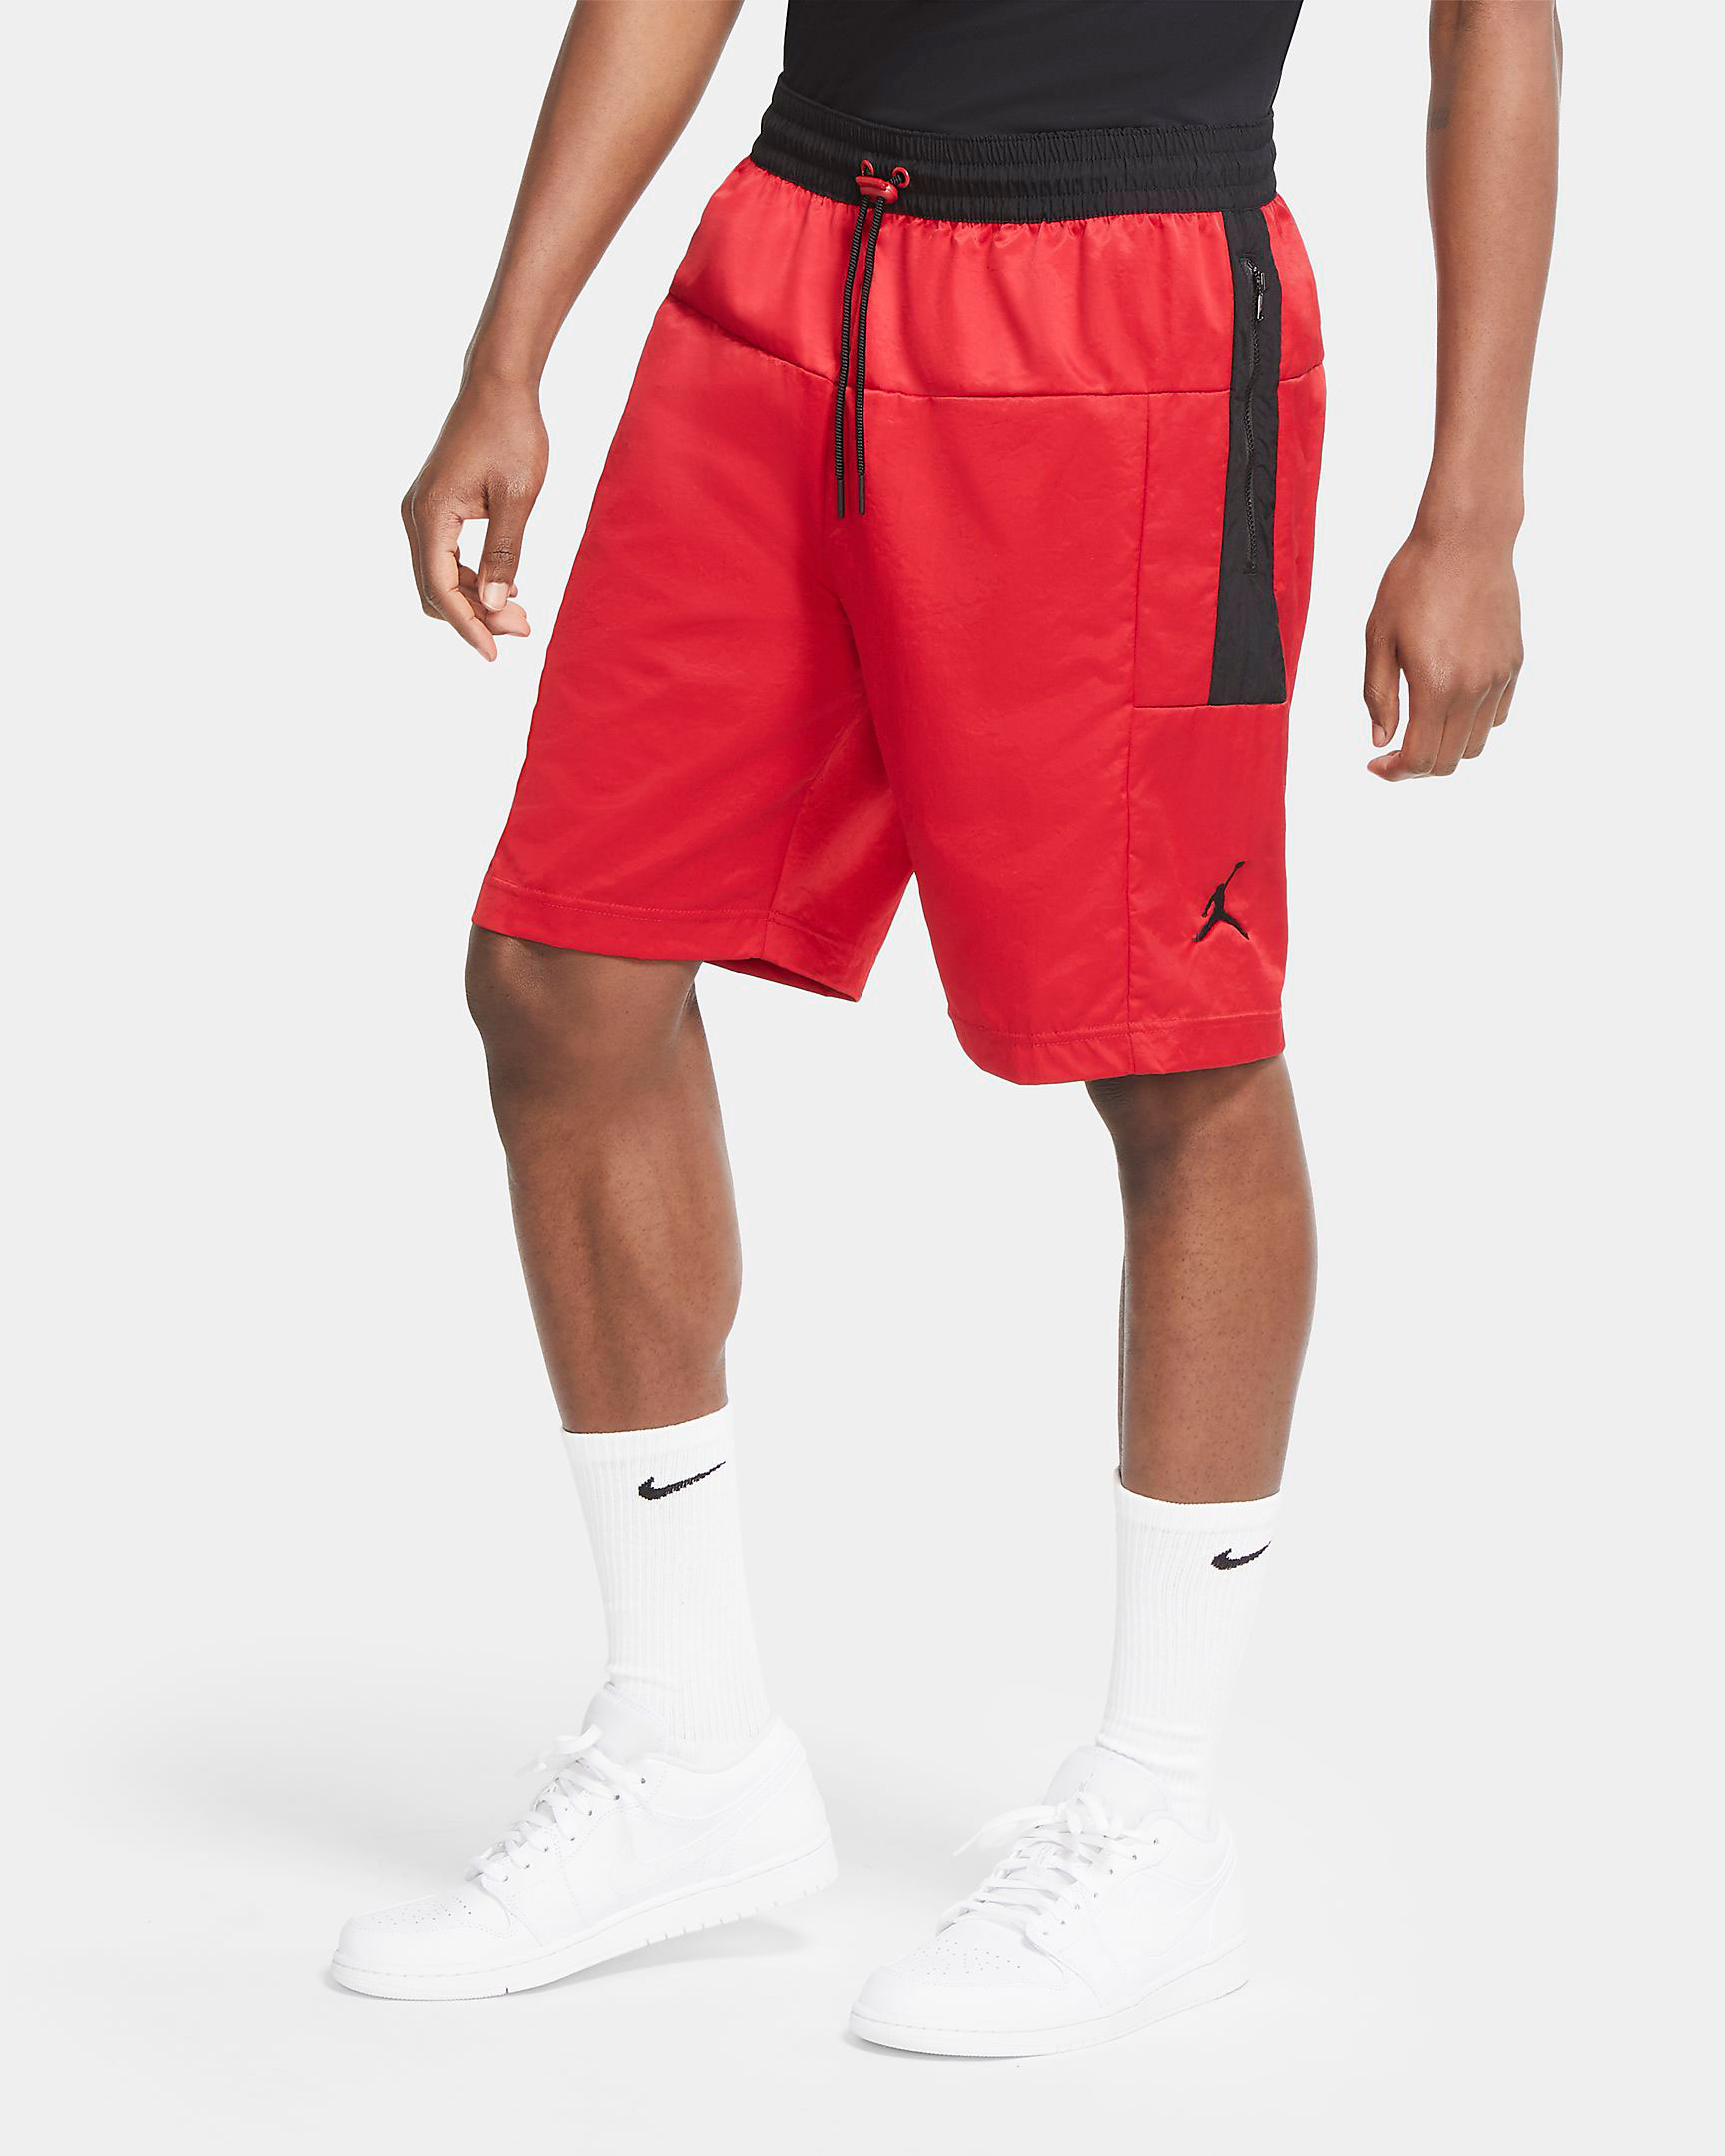 jordan 11 with shorts